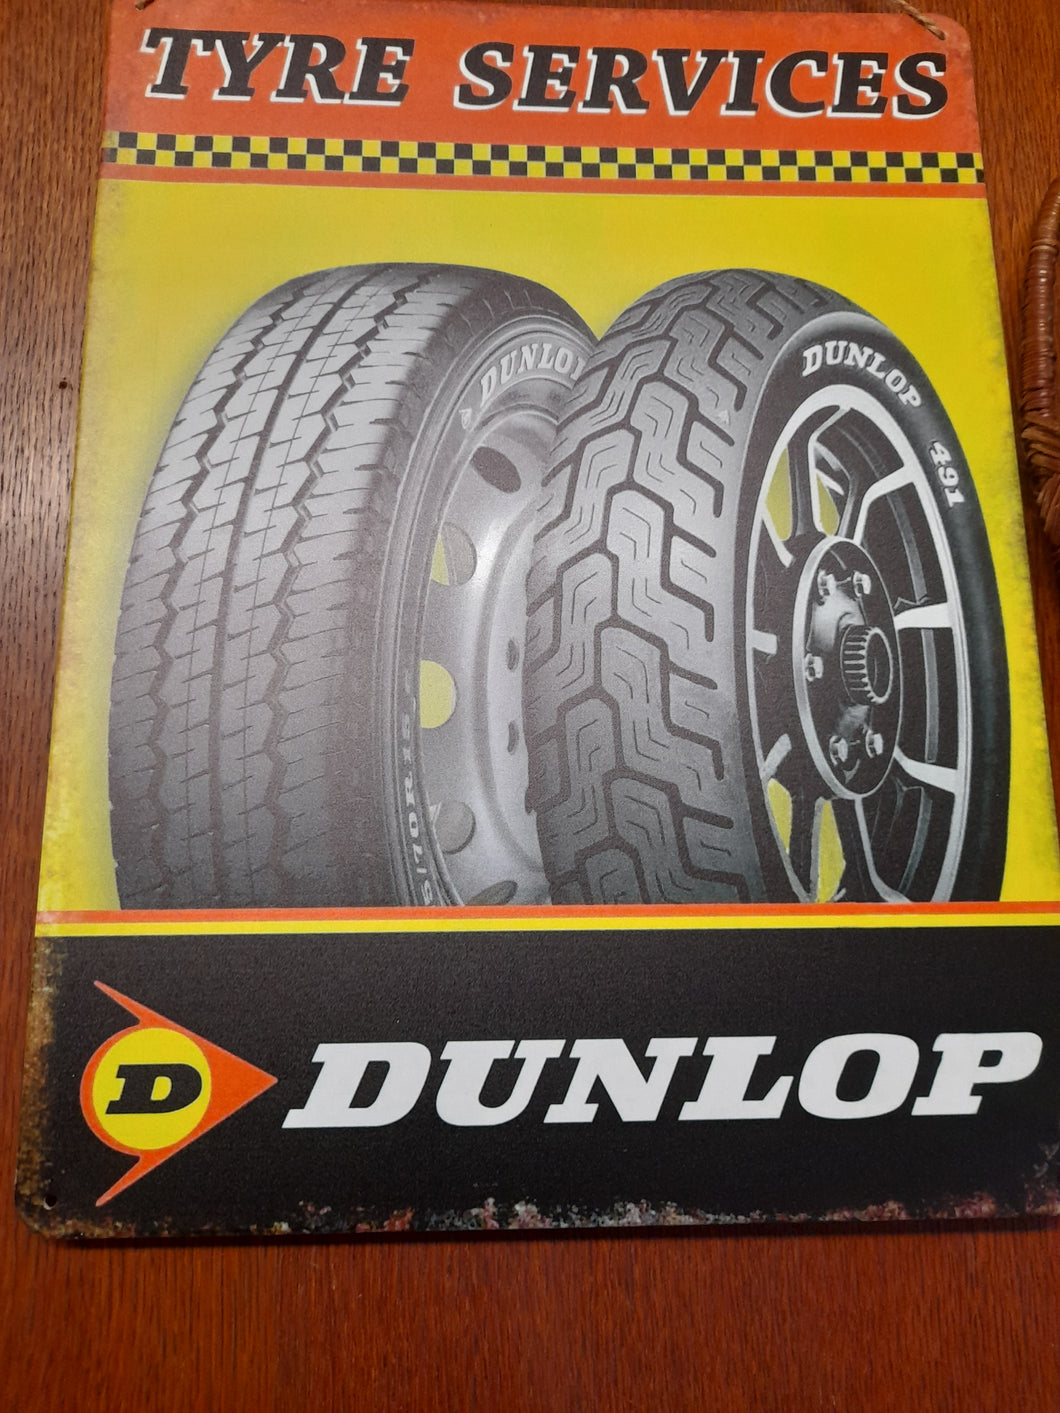 Dunlop Tyre service vintage style metal sign